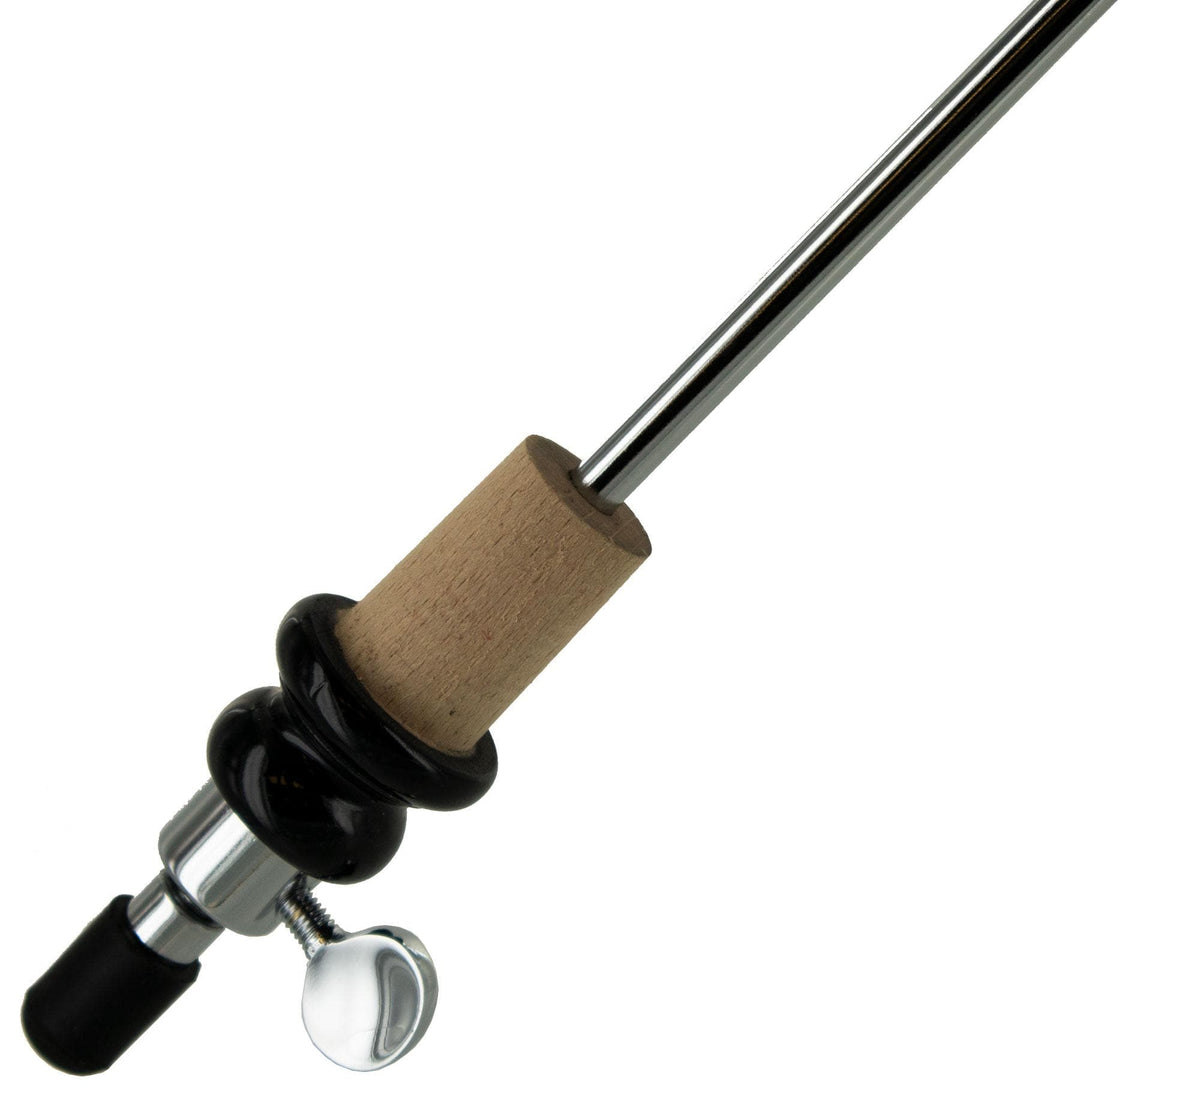 Cello Endpin with Ebonized Plug – 14” long, 8mm diameter shaft